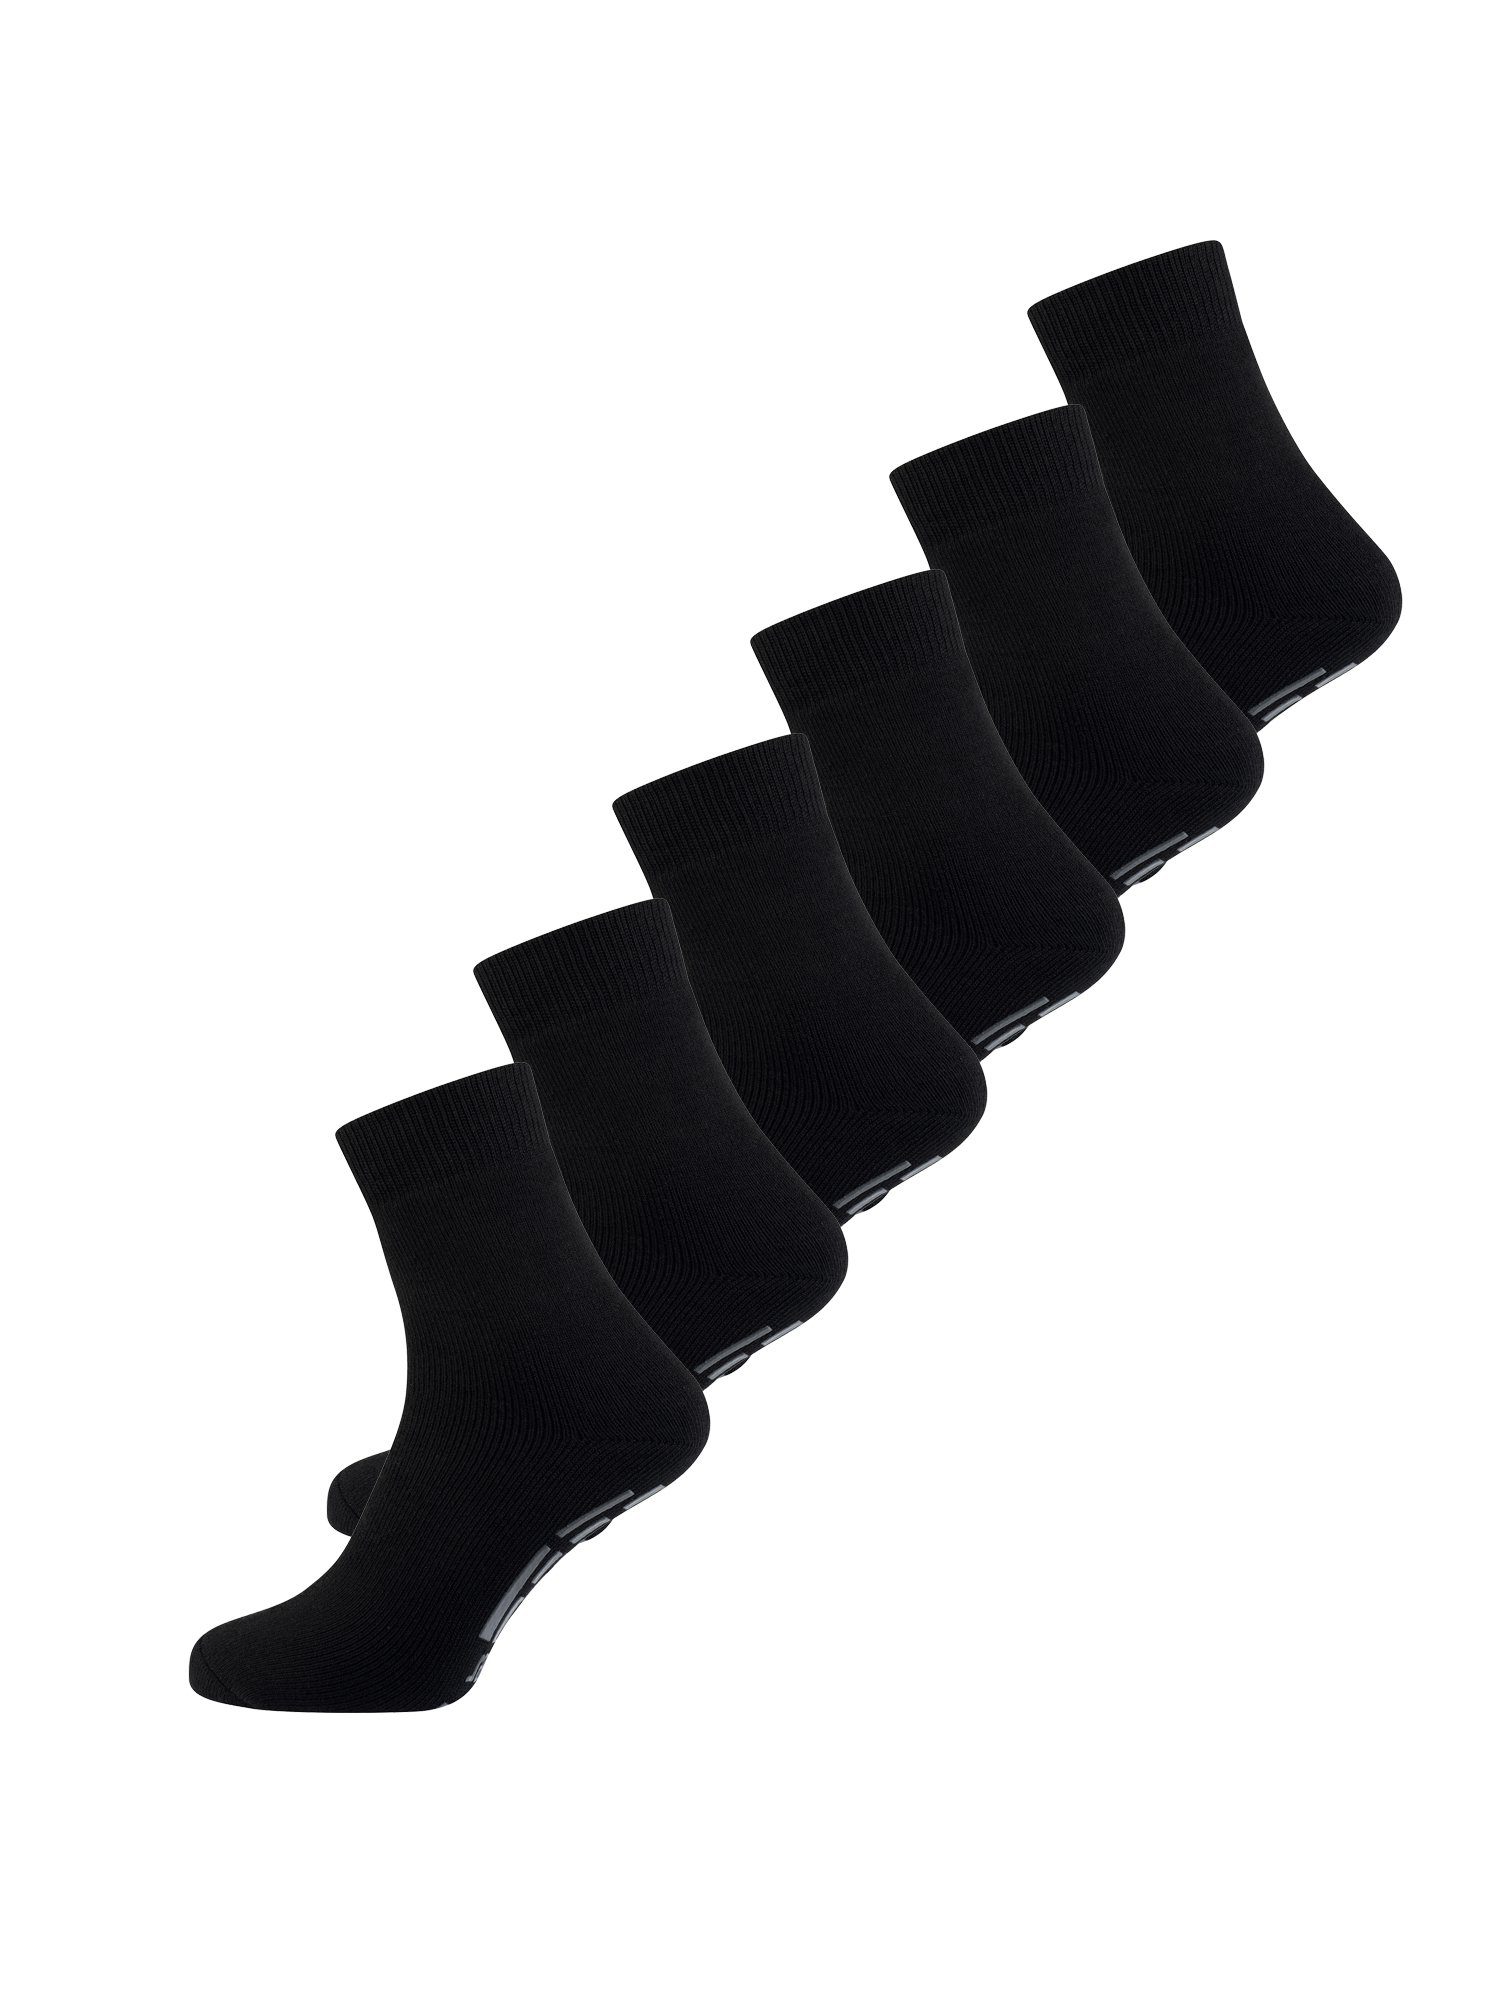 Nur Der Basicsocken Stopper (6-Paar) Socken günstig uni